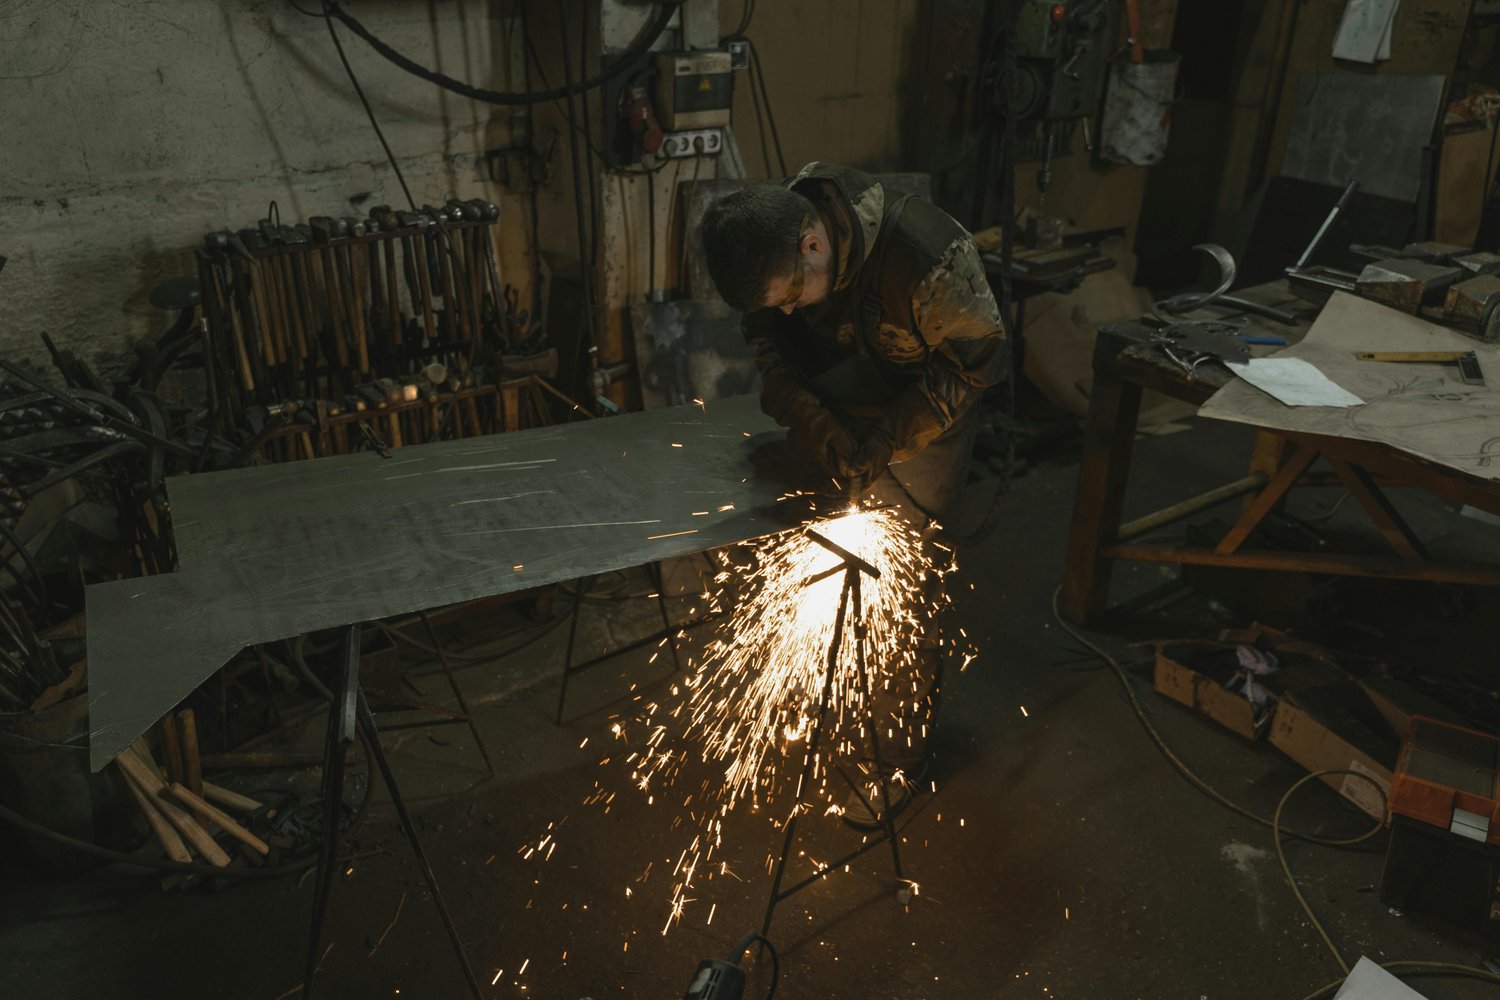 Man in Safety Glasses Welding a Metal Bar | Photo by Tima Miroshnichenko via Pexels